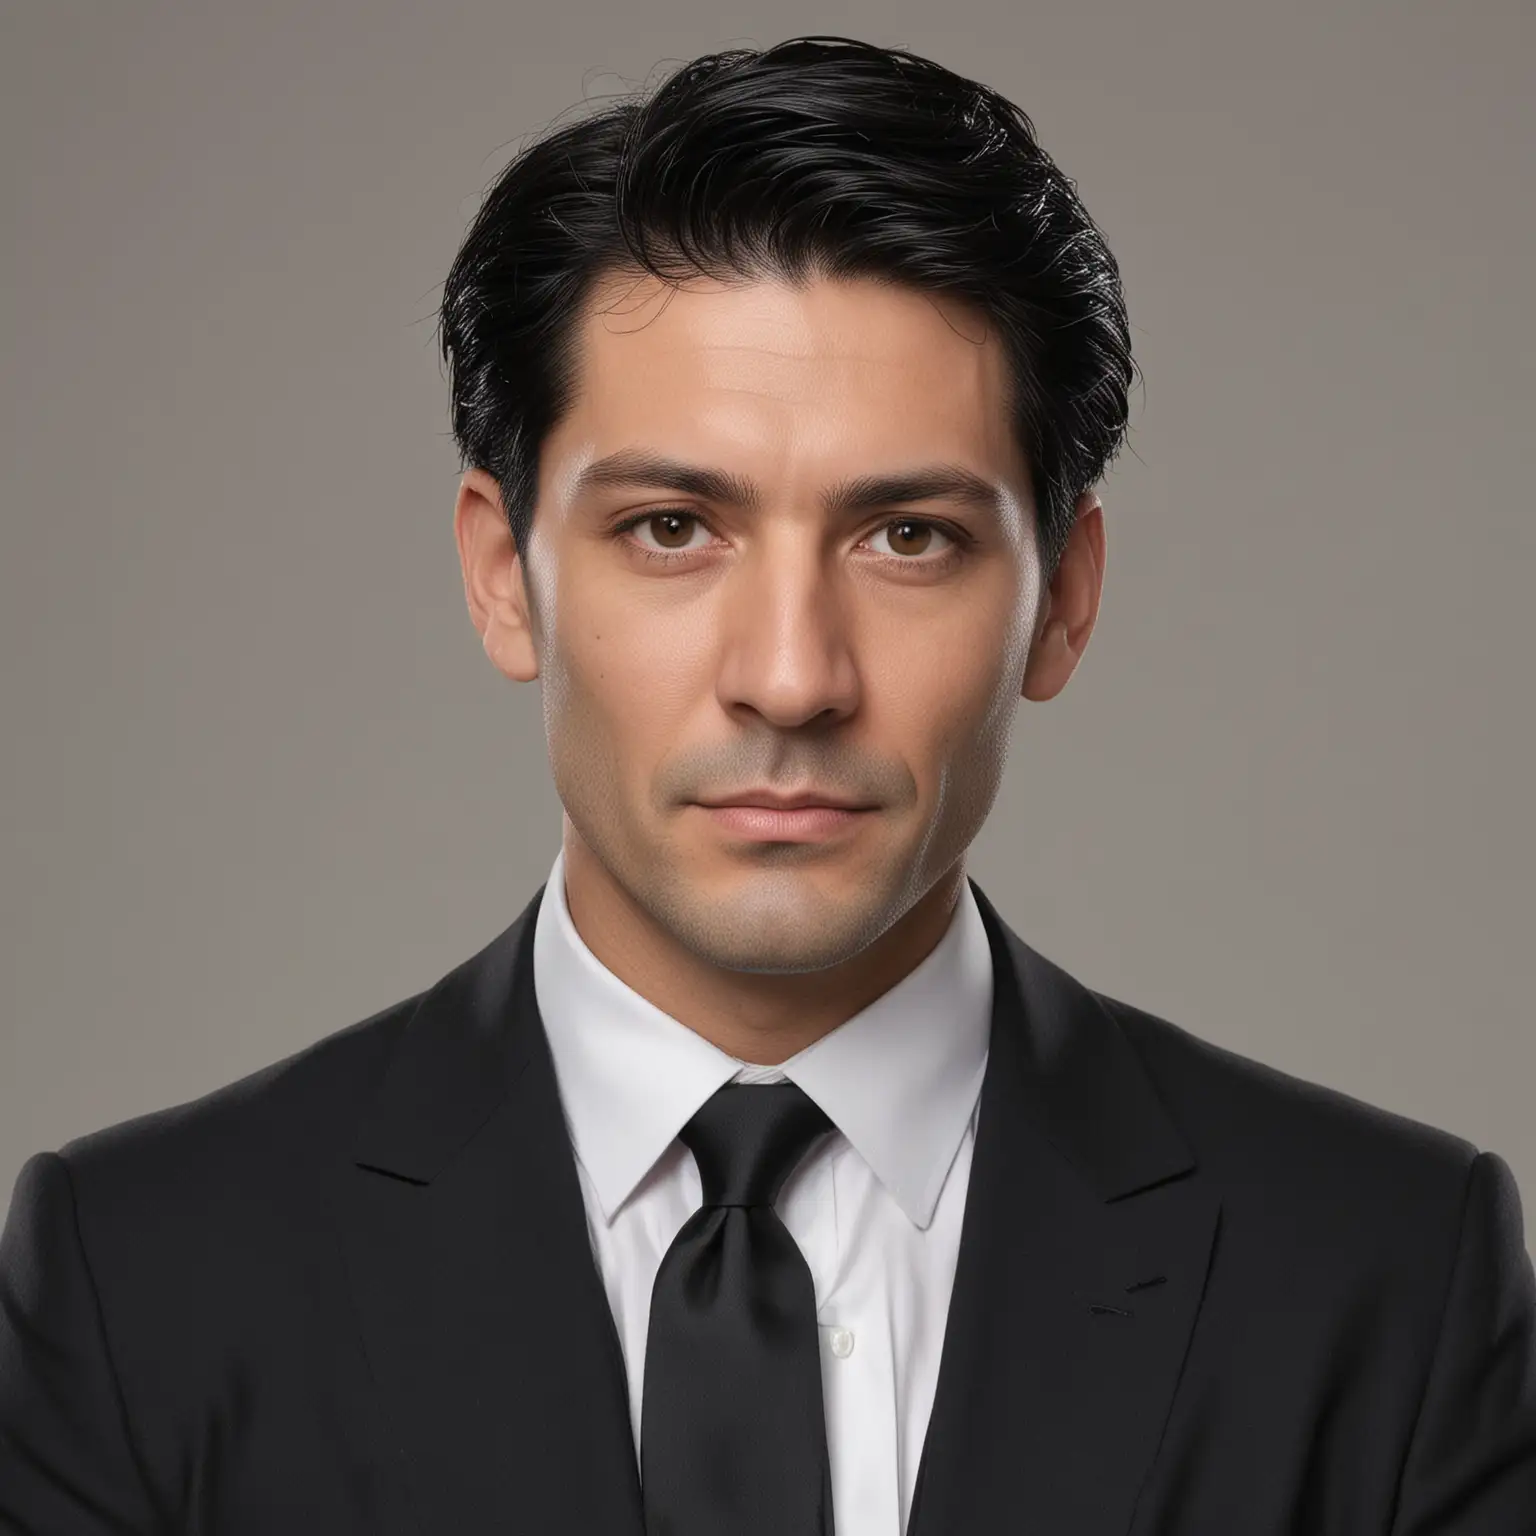 Portrait of Mature Man in Black Suit and Tie Against Plain Grey Background